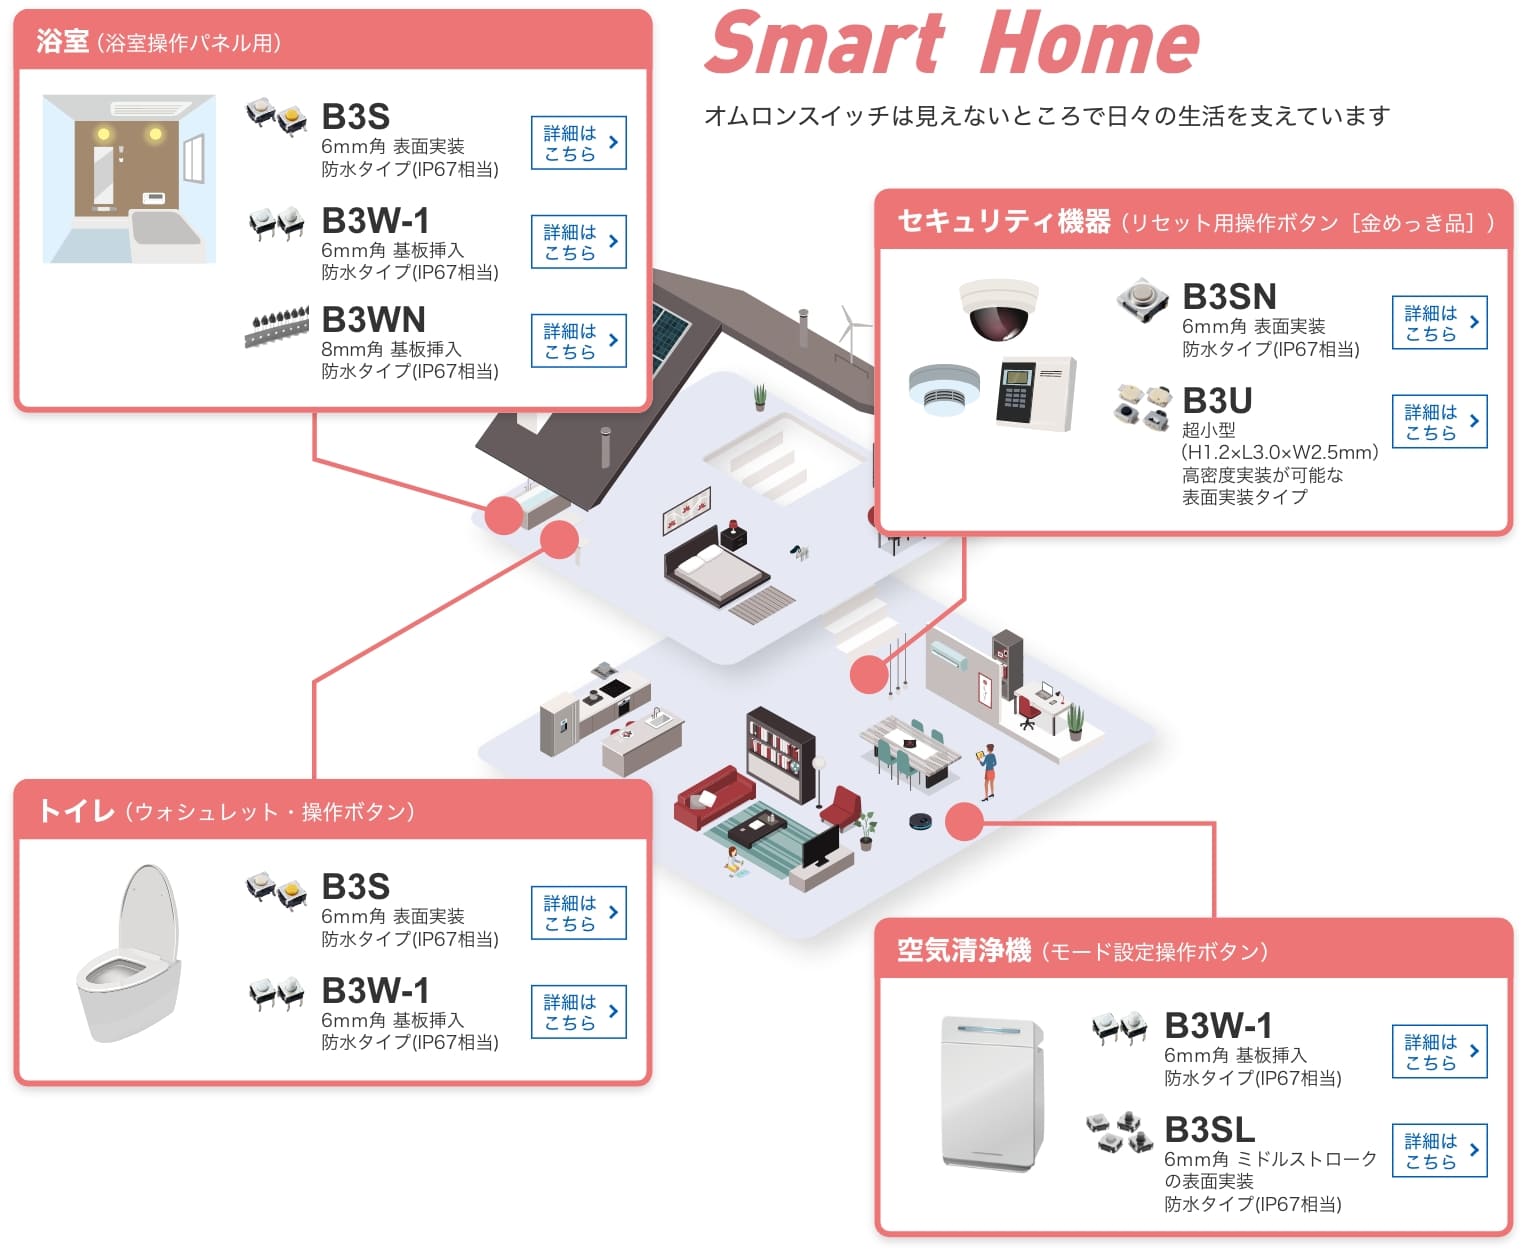 Smart Home オムロンスイッチは見えないところで日々の生活を支えています。浴室（浴室操作パネル用）B3S:6mm角 表面実装 防水タイプ(IP67相当)、B3W-1:6mm角 基板挿入 防水タイプ(IP67相当)、B3WN:8mm角 基板挿入 防水タイプ(IP67相当) トイレ（ウォシュレット・操作ボタン）B3S:6mm角 表面実装 防水タイプ(IP67相当)、B3W-1:6mm角 基板挿入 防水タイプ(IP67相当) セキュリティ機器（リセット用操作ボタン［金めっき品］）B3SN:6mm角 表面実装 防水タイプ(IP67相当) B3U:超小型（H1.2×L3.0×W2.5mm）高密度実装が可能な表面実装タイプ 空気清浄機（モード設定操作ボタン）B3W-1:6mm角 基板挿入 防水タイプ(IP67相当)、B3SL:6mm角 ミドルストロークの表面実装 防水タイプ(IP67相当)